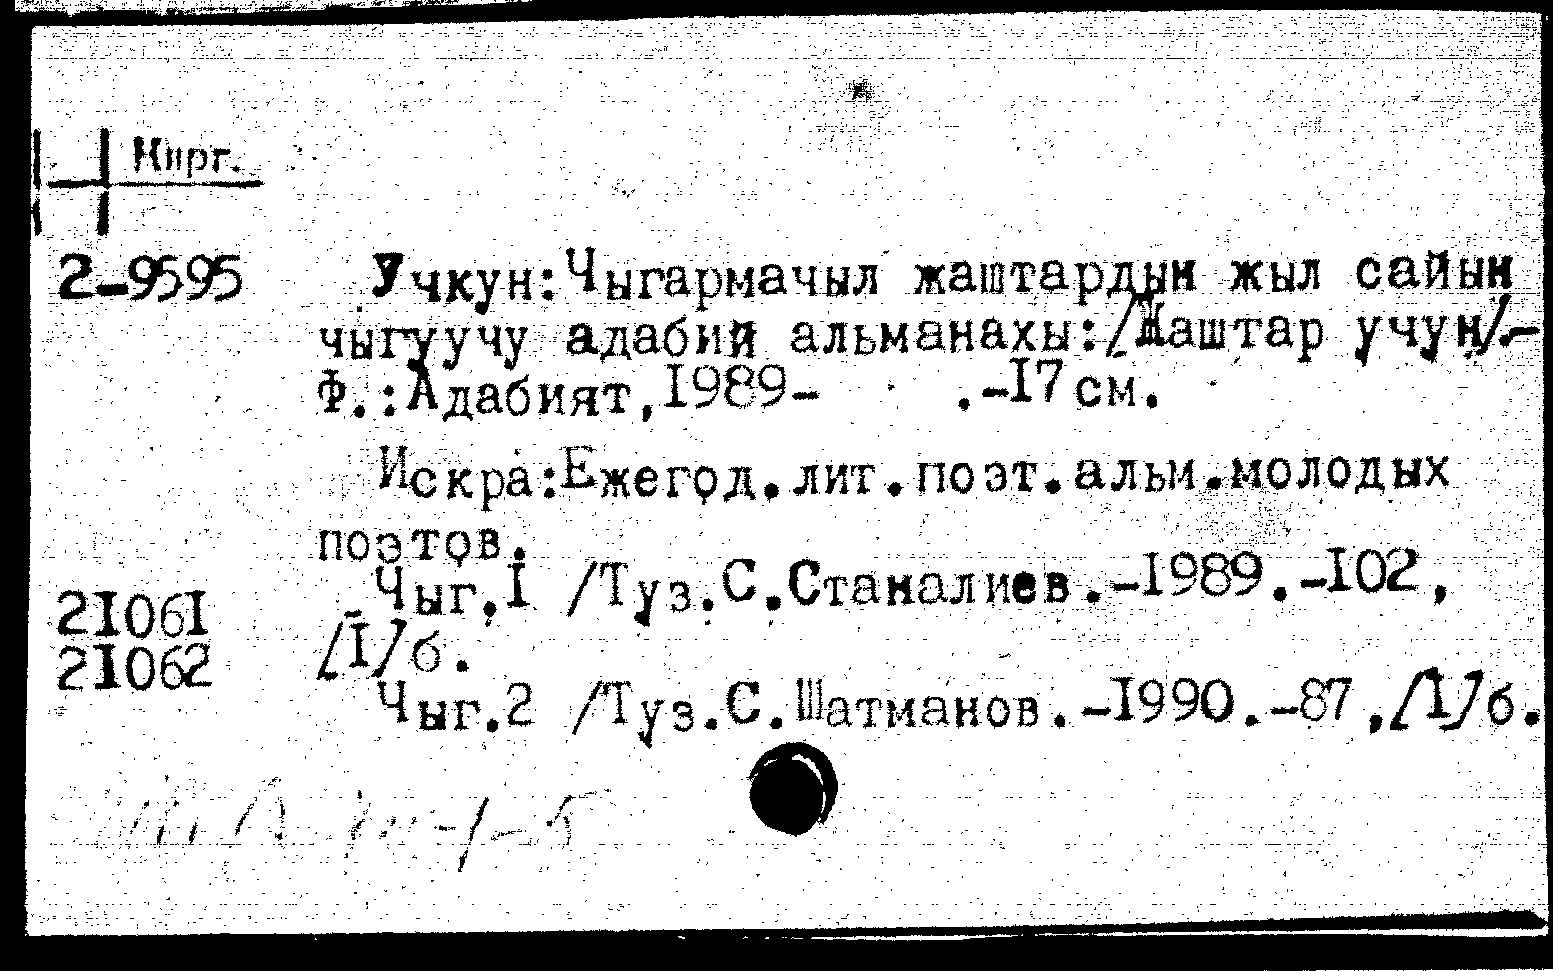 Sample card from the Russian National Library's KATALOG LITERATURY NA KIRGIZSKOM IAZYKE